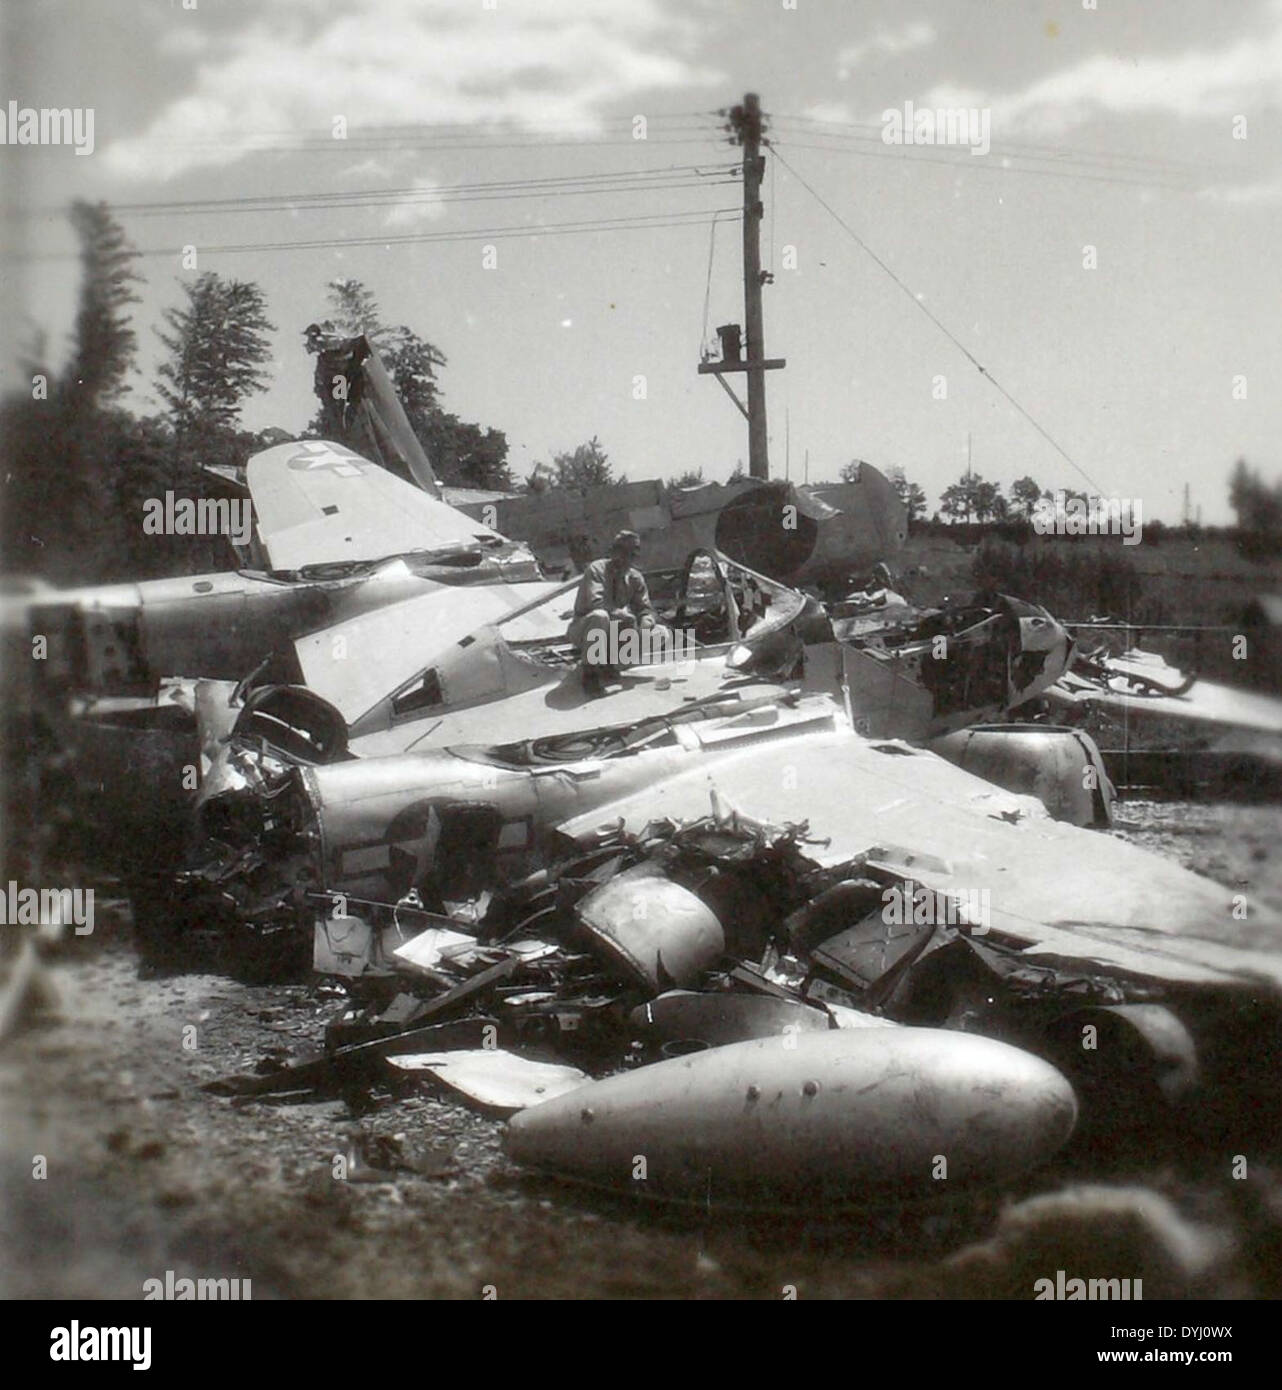 15 Daniels Album P-38 in Boneyard Stock Photo